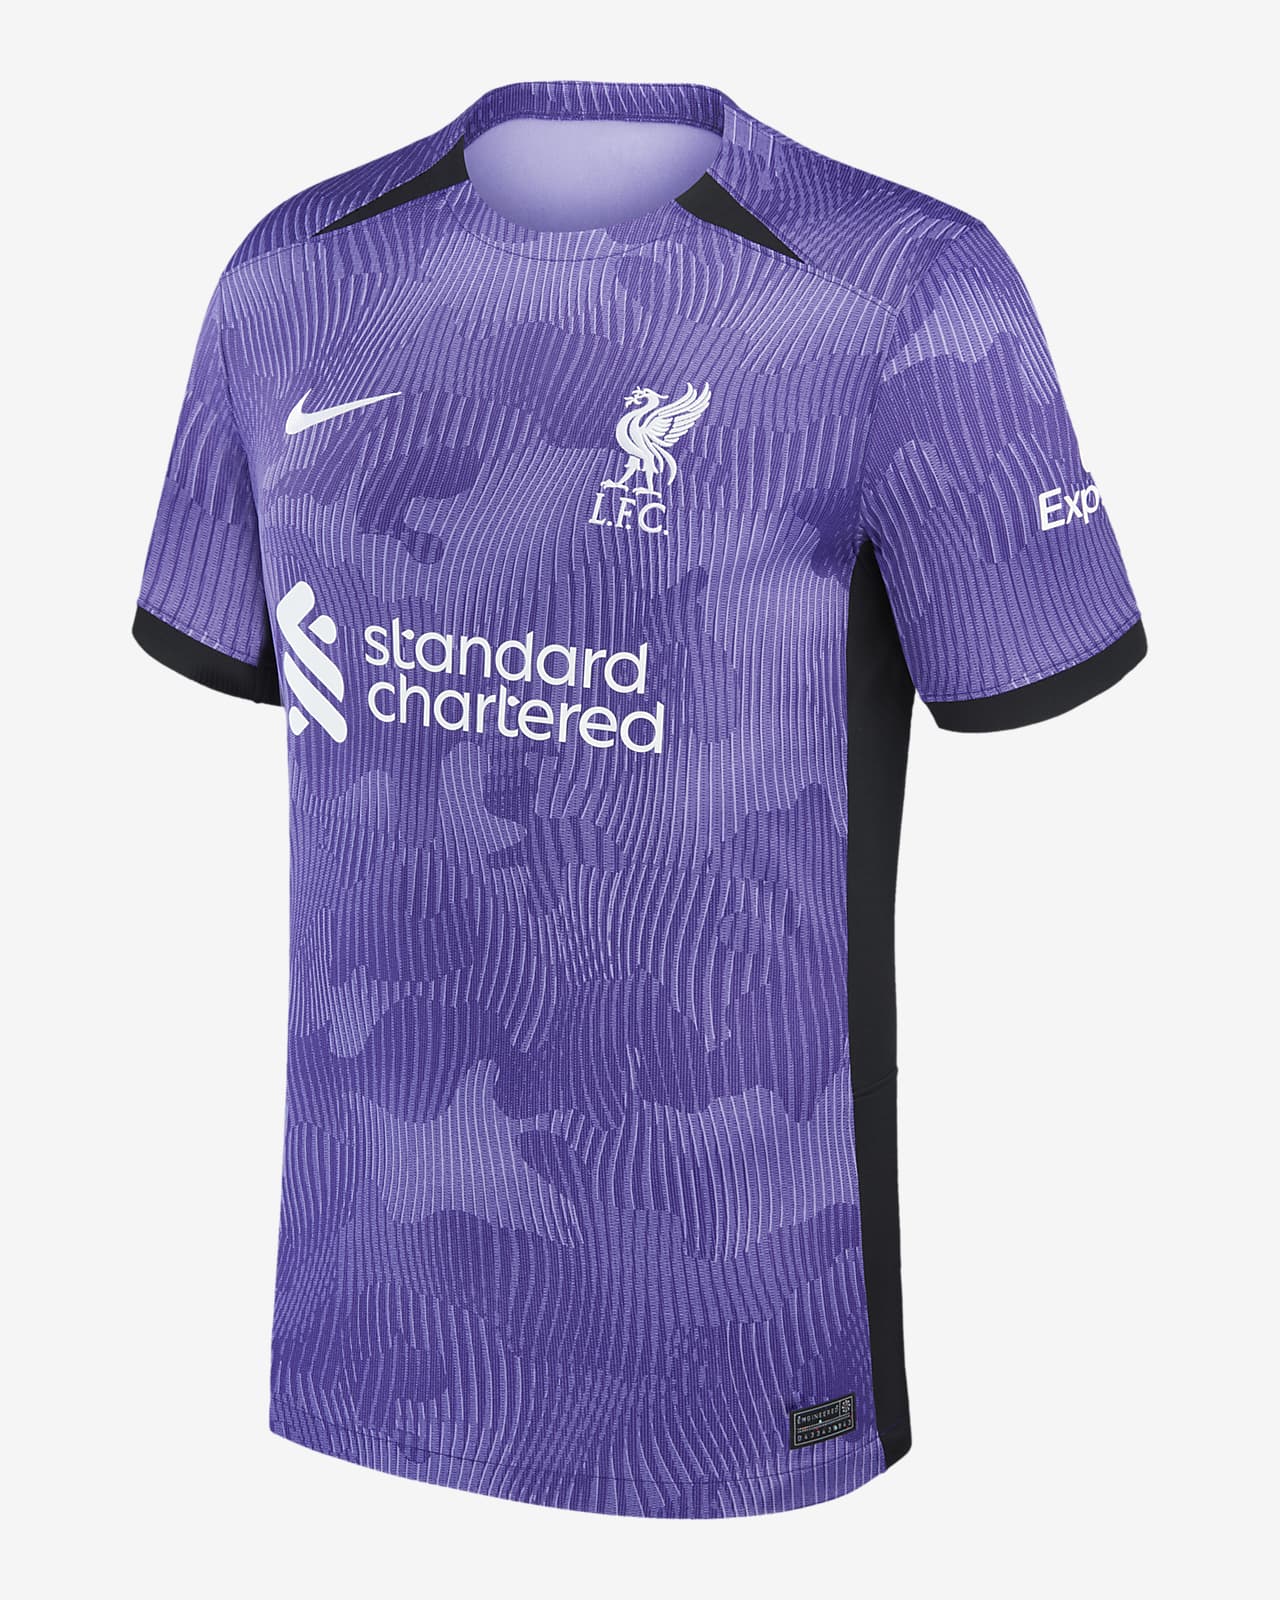 Nike drop the Liverpool 2023-24 away kit